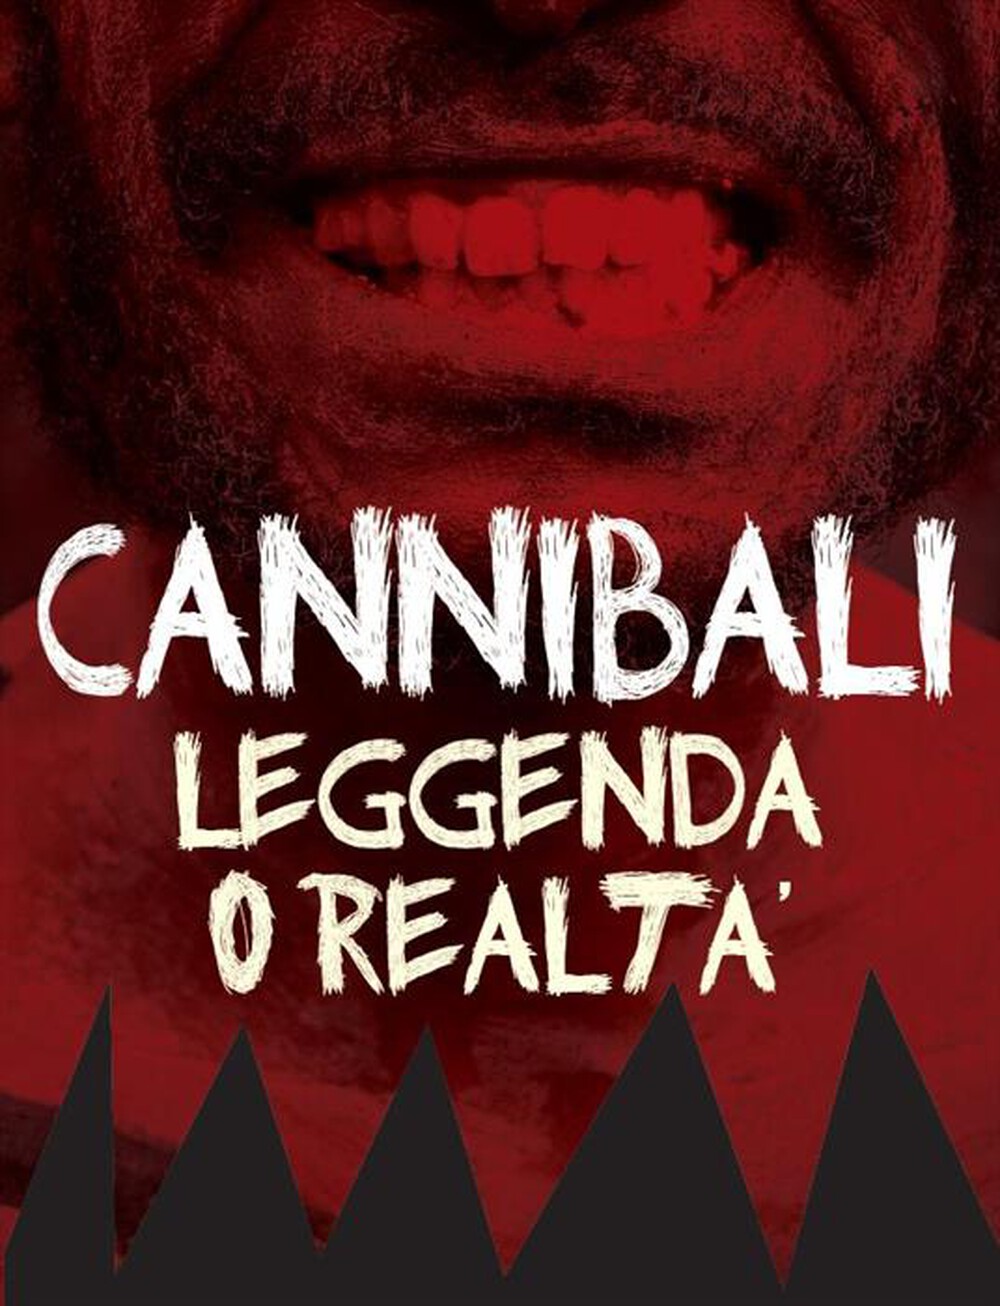 "30 HOLDING - Cannibali Leggenda O Realta'"